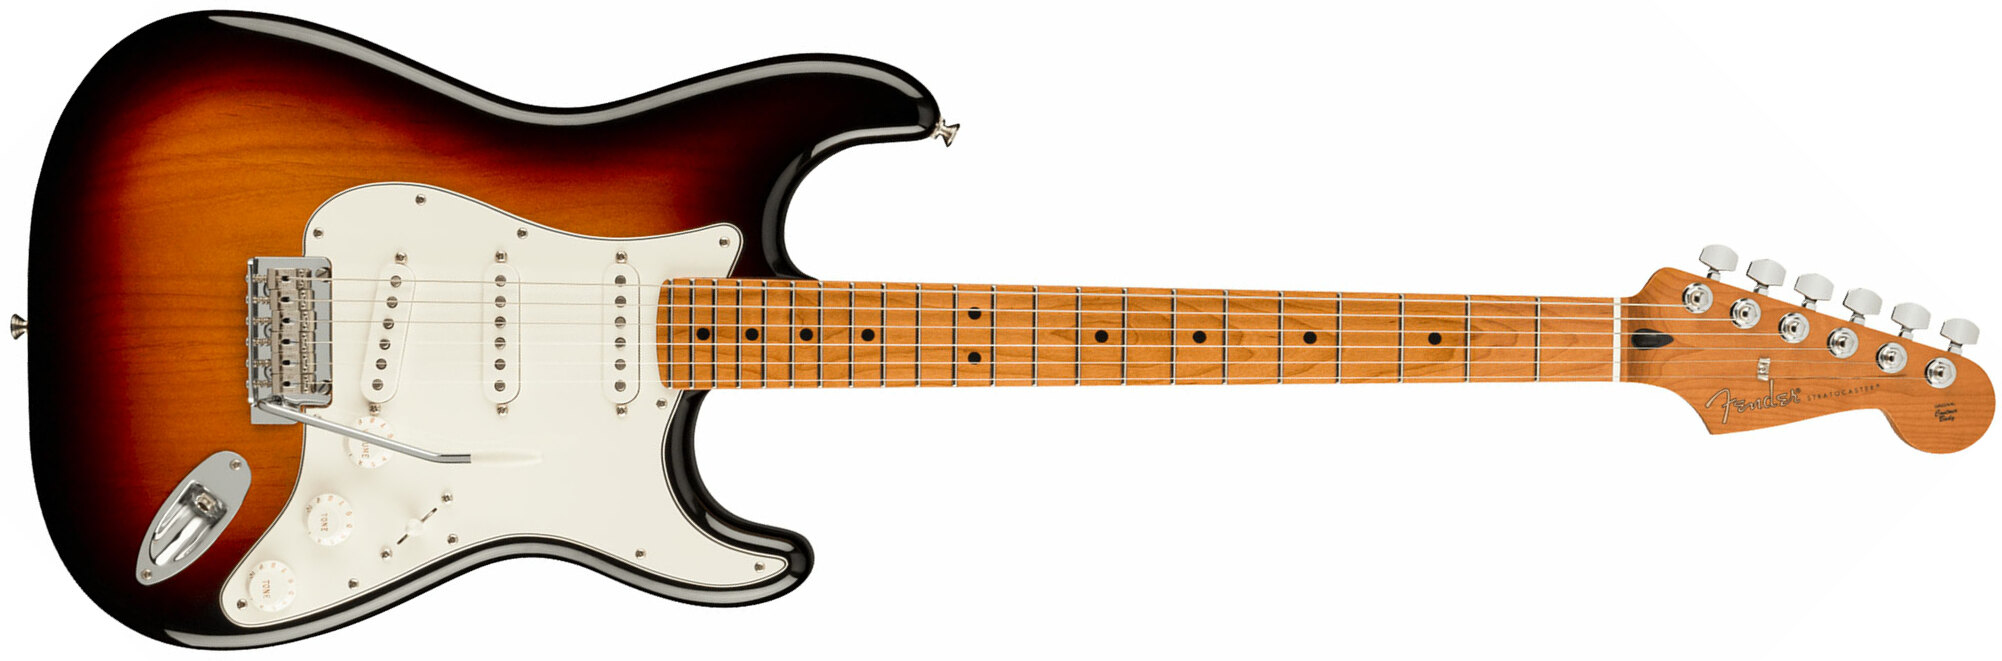 Fender Strat Player Roasted Maple Neck Ltd Mex 3s Trem Mn - 3 Color Sunburst - E-Gitarre in Str-Form - Main picture